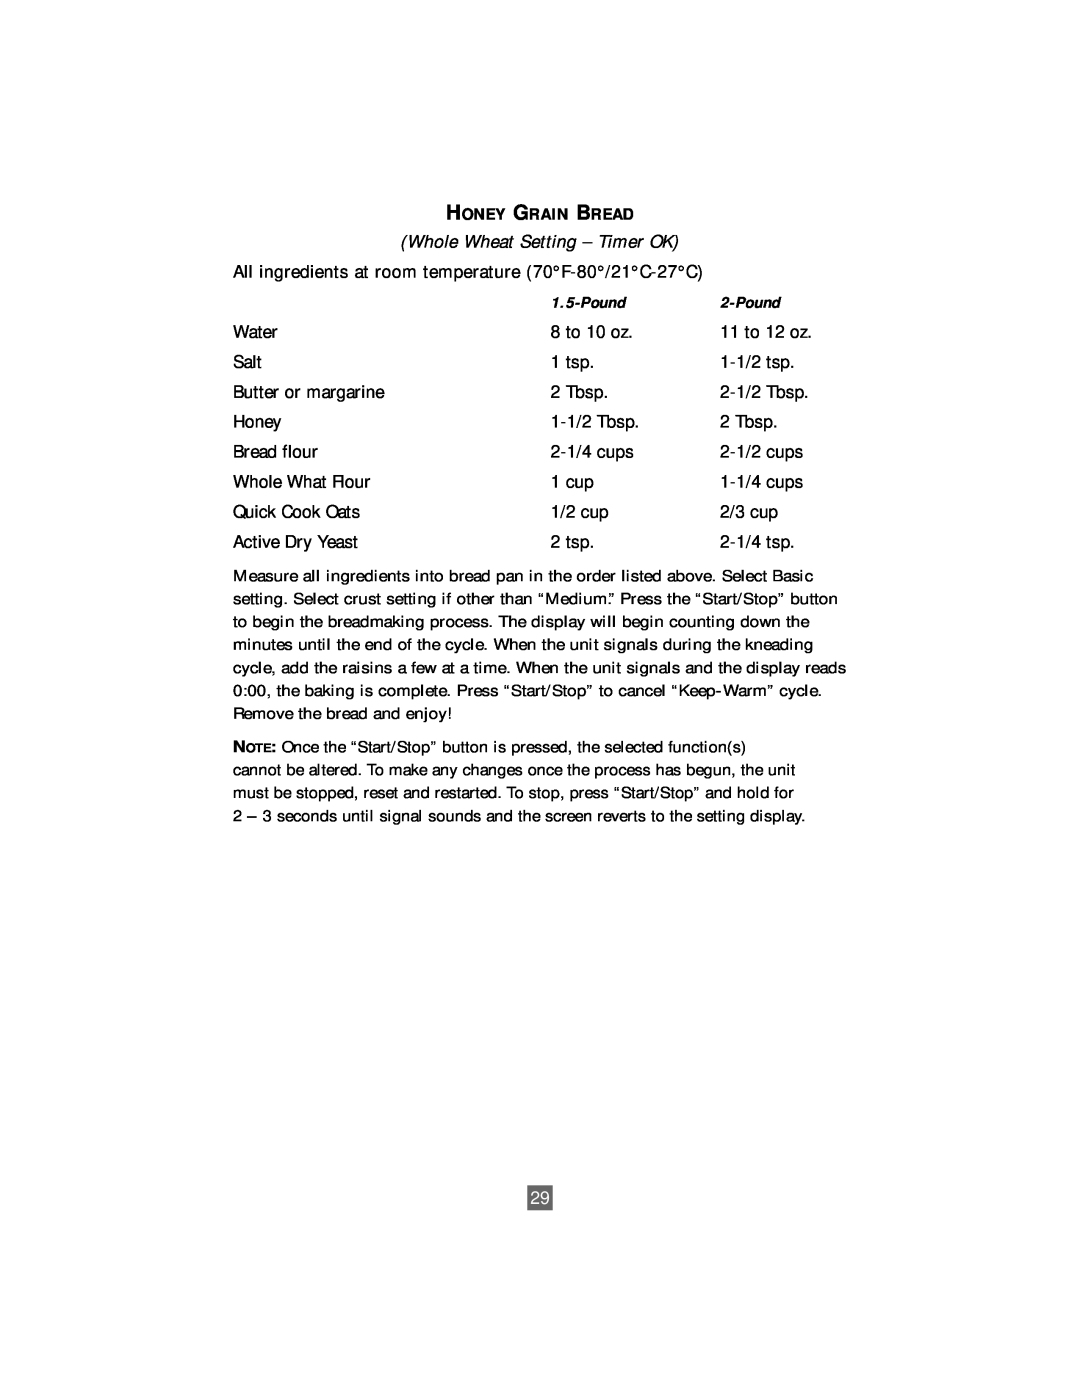 Sunbeam Deluxe 2-Pound Bread & Dough Maker manual Whole Wheat Setting - Timer OK, Honey Grain Bread 